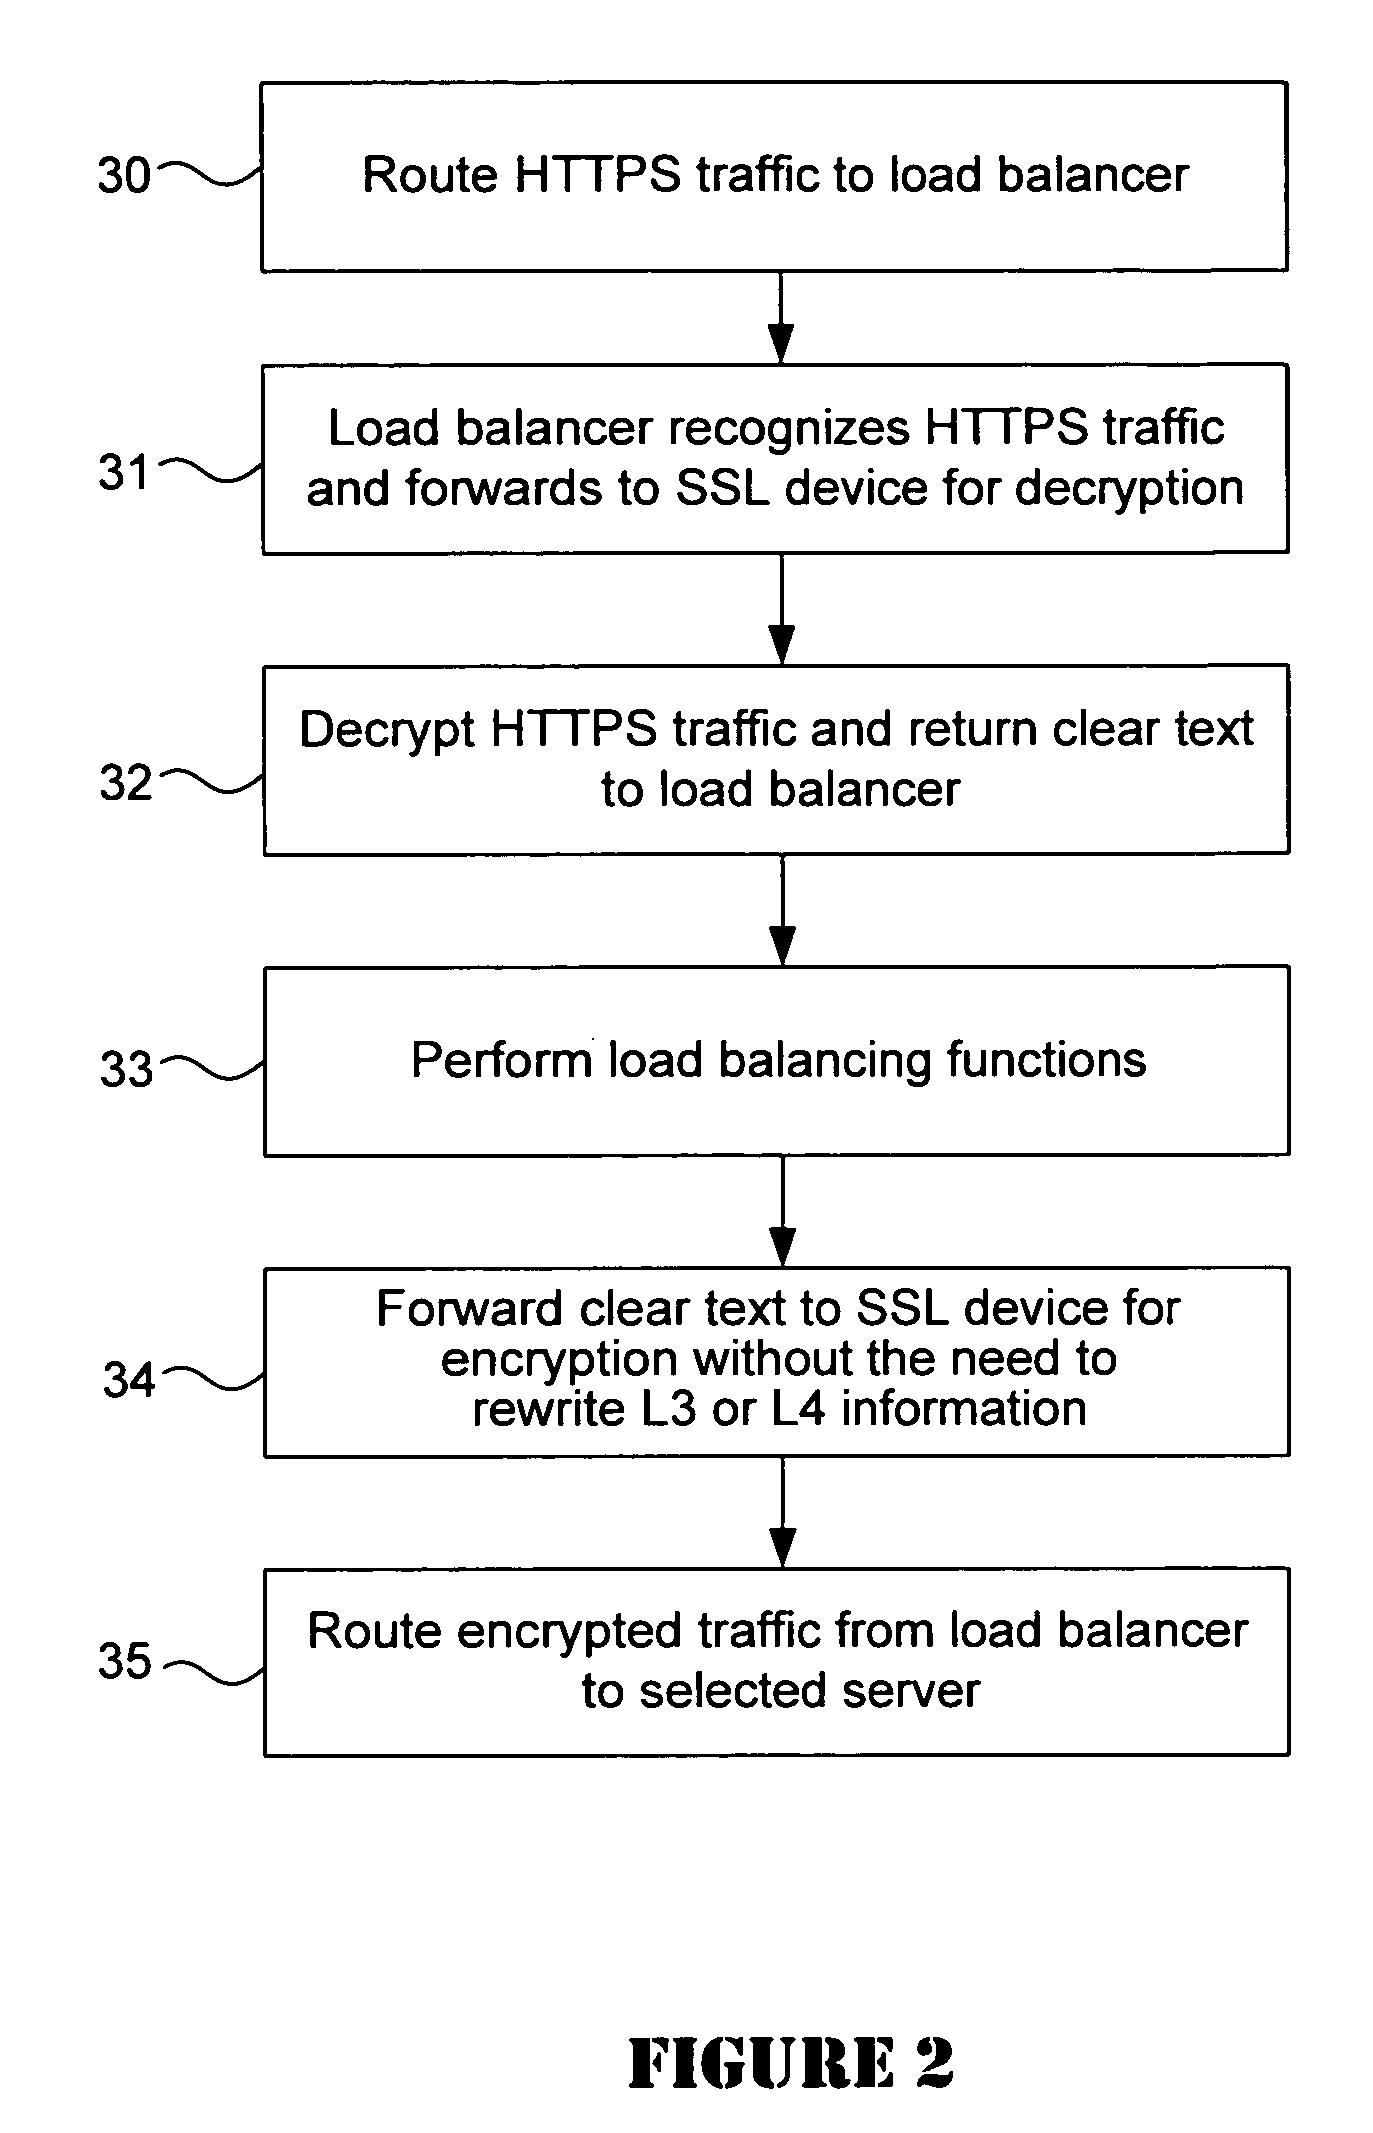 System for SSL re-encryption after load balance